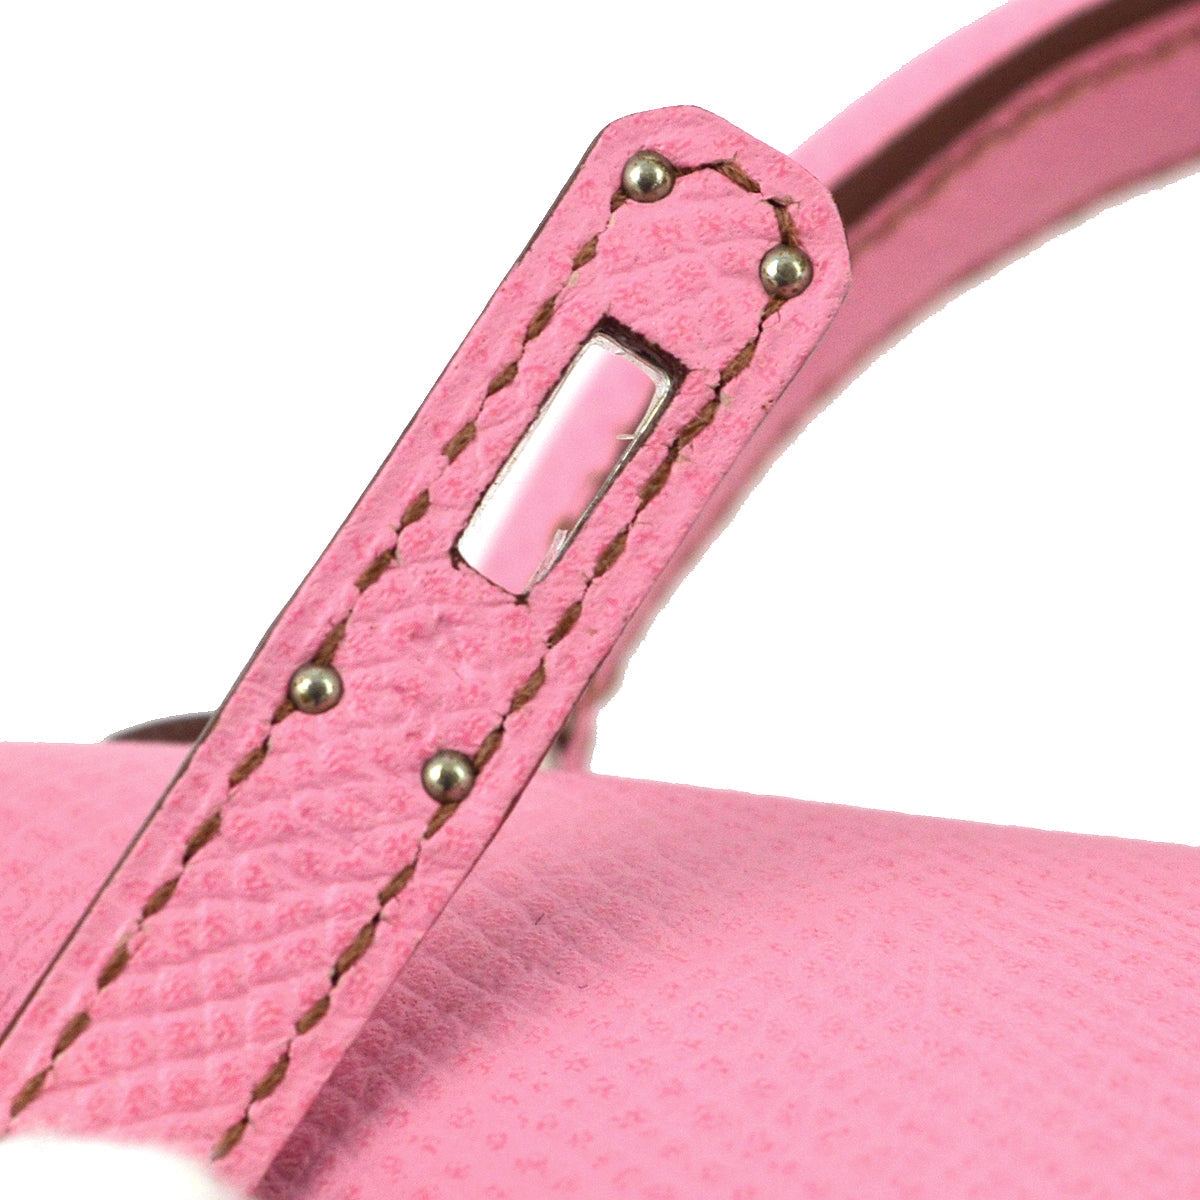 Hermes * Pink Epsom Tiny Kelly Sellier 2way Shoulder Handbag